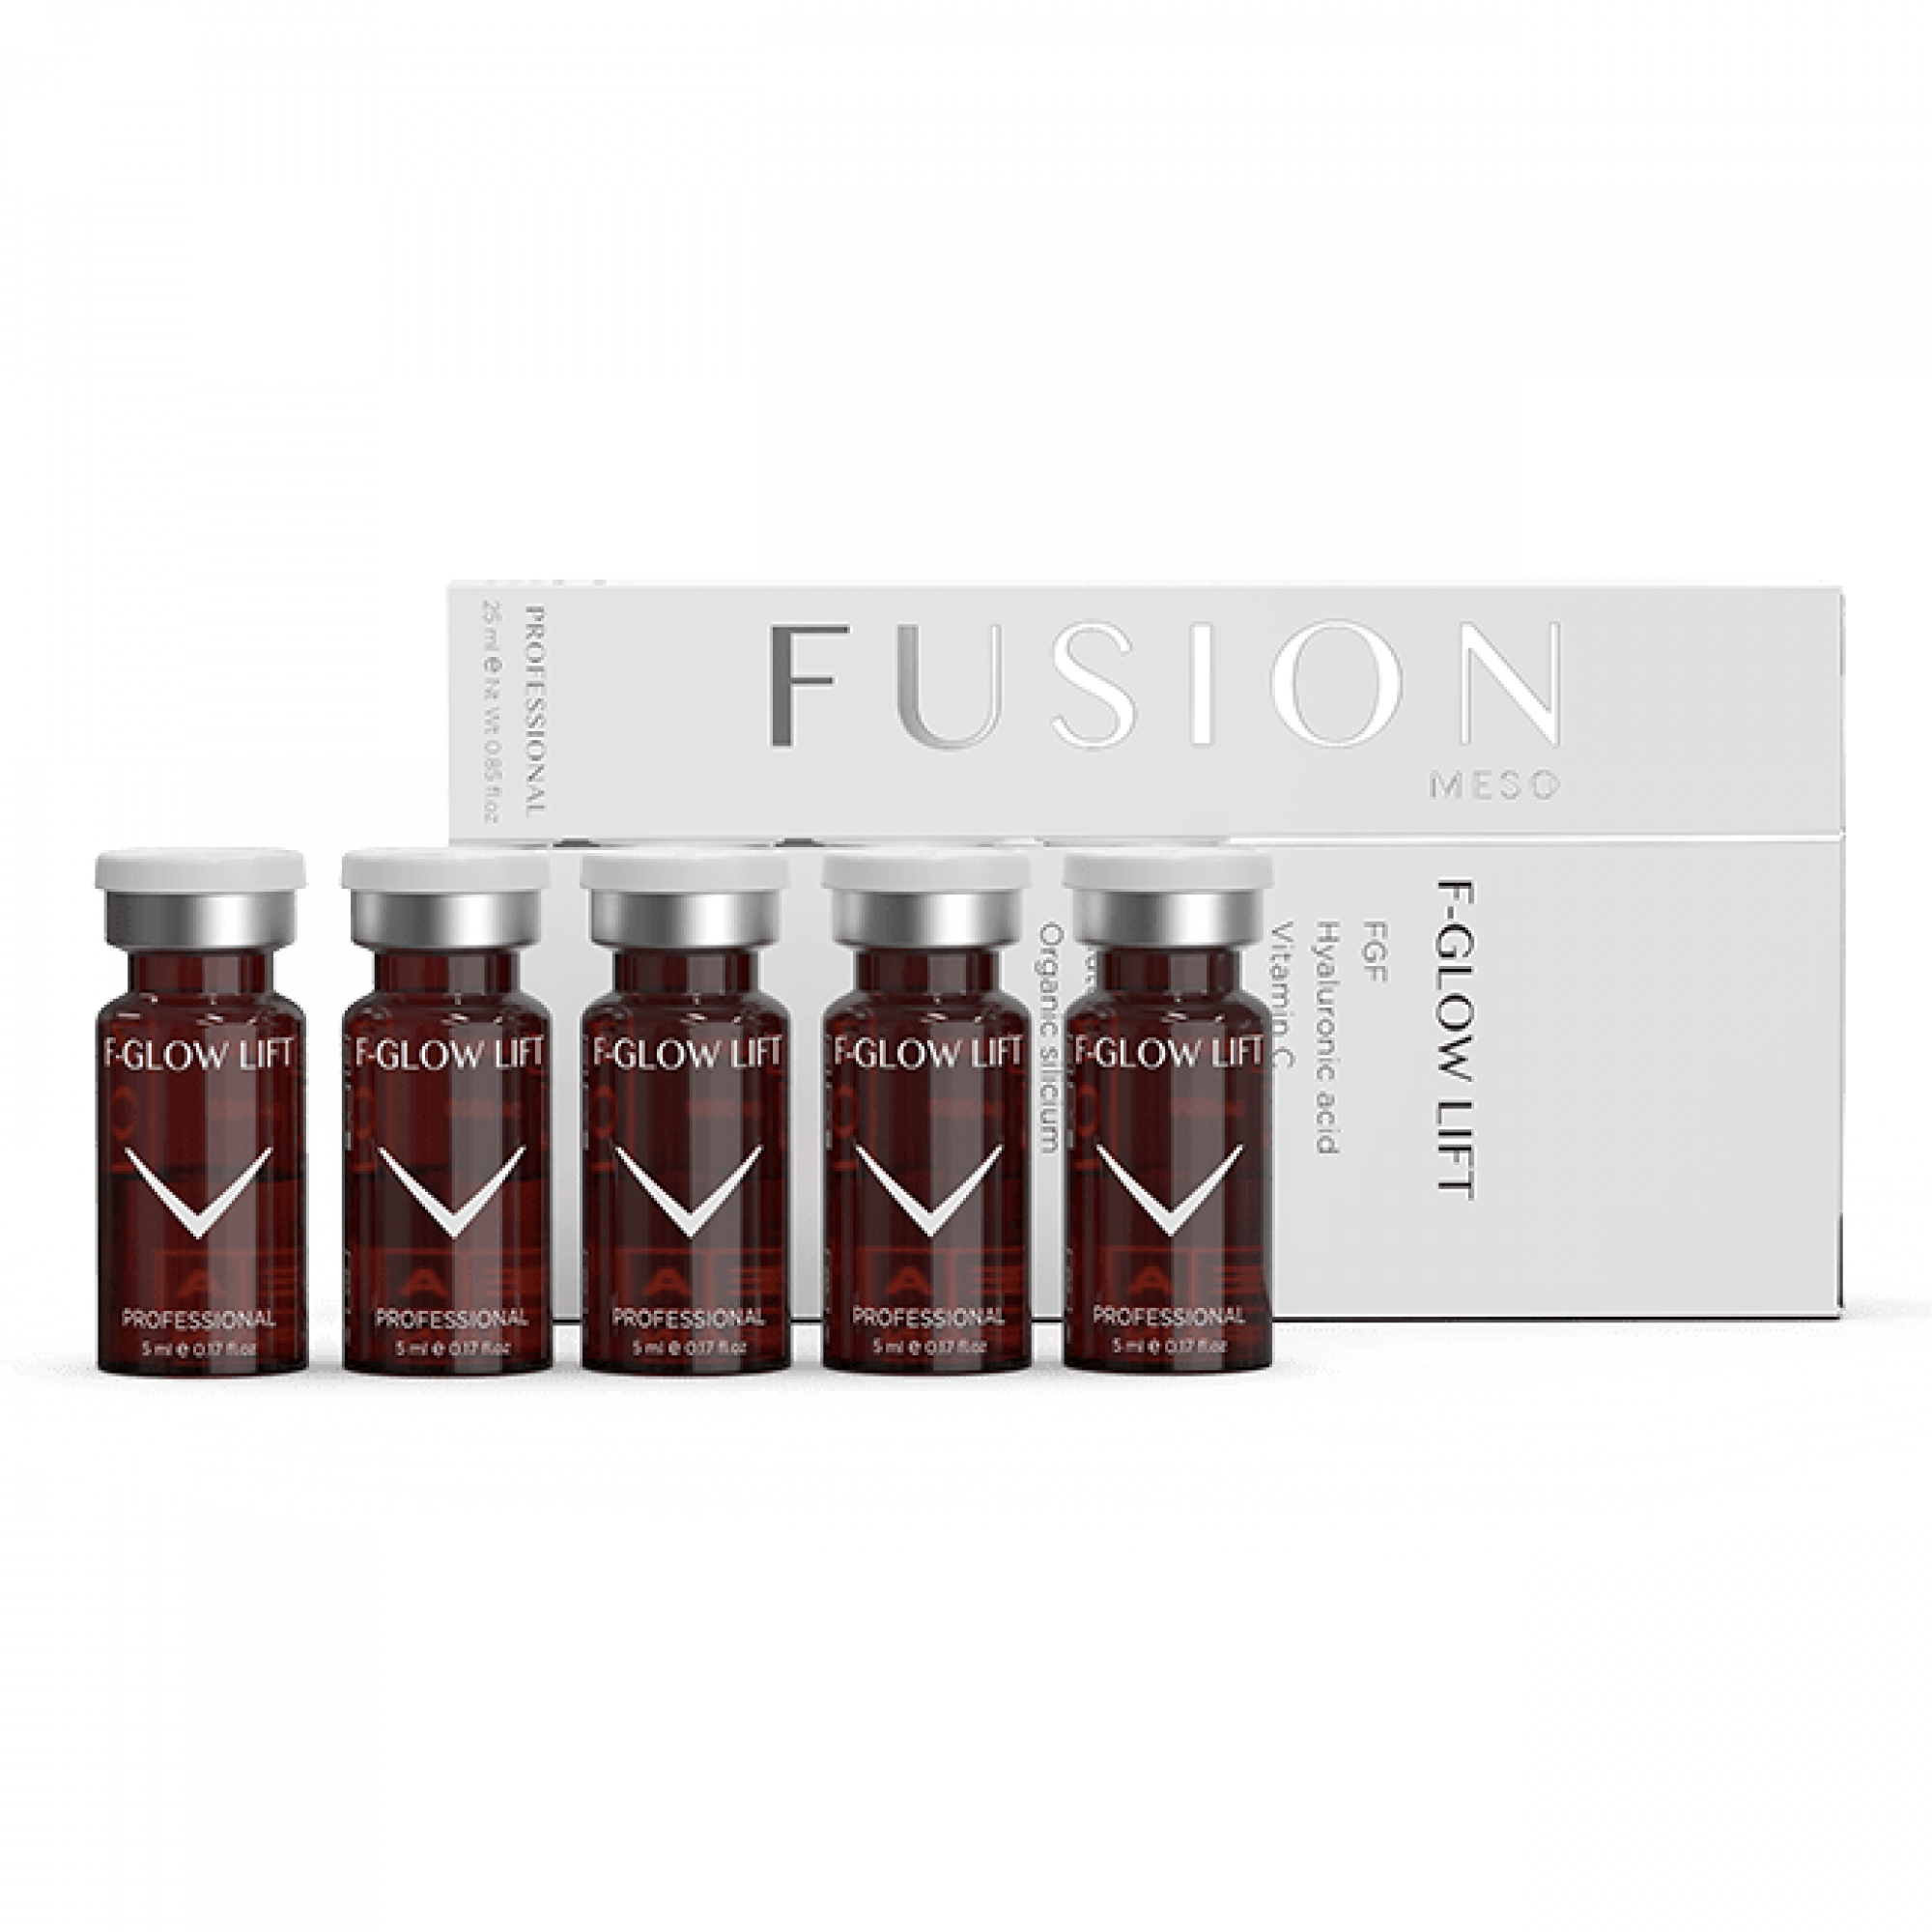 Fusion Meso Vials F-GLOW LIFT  5x5 ml